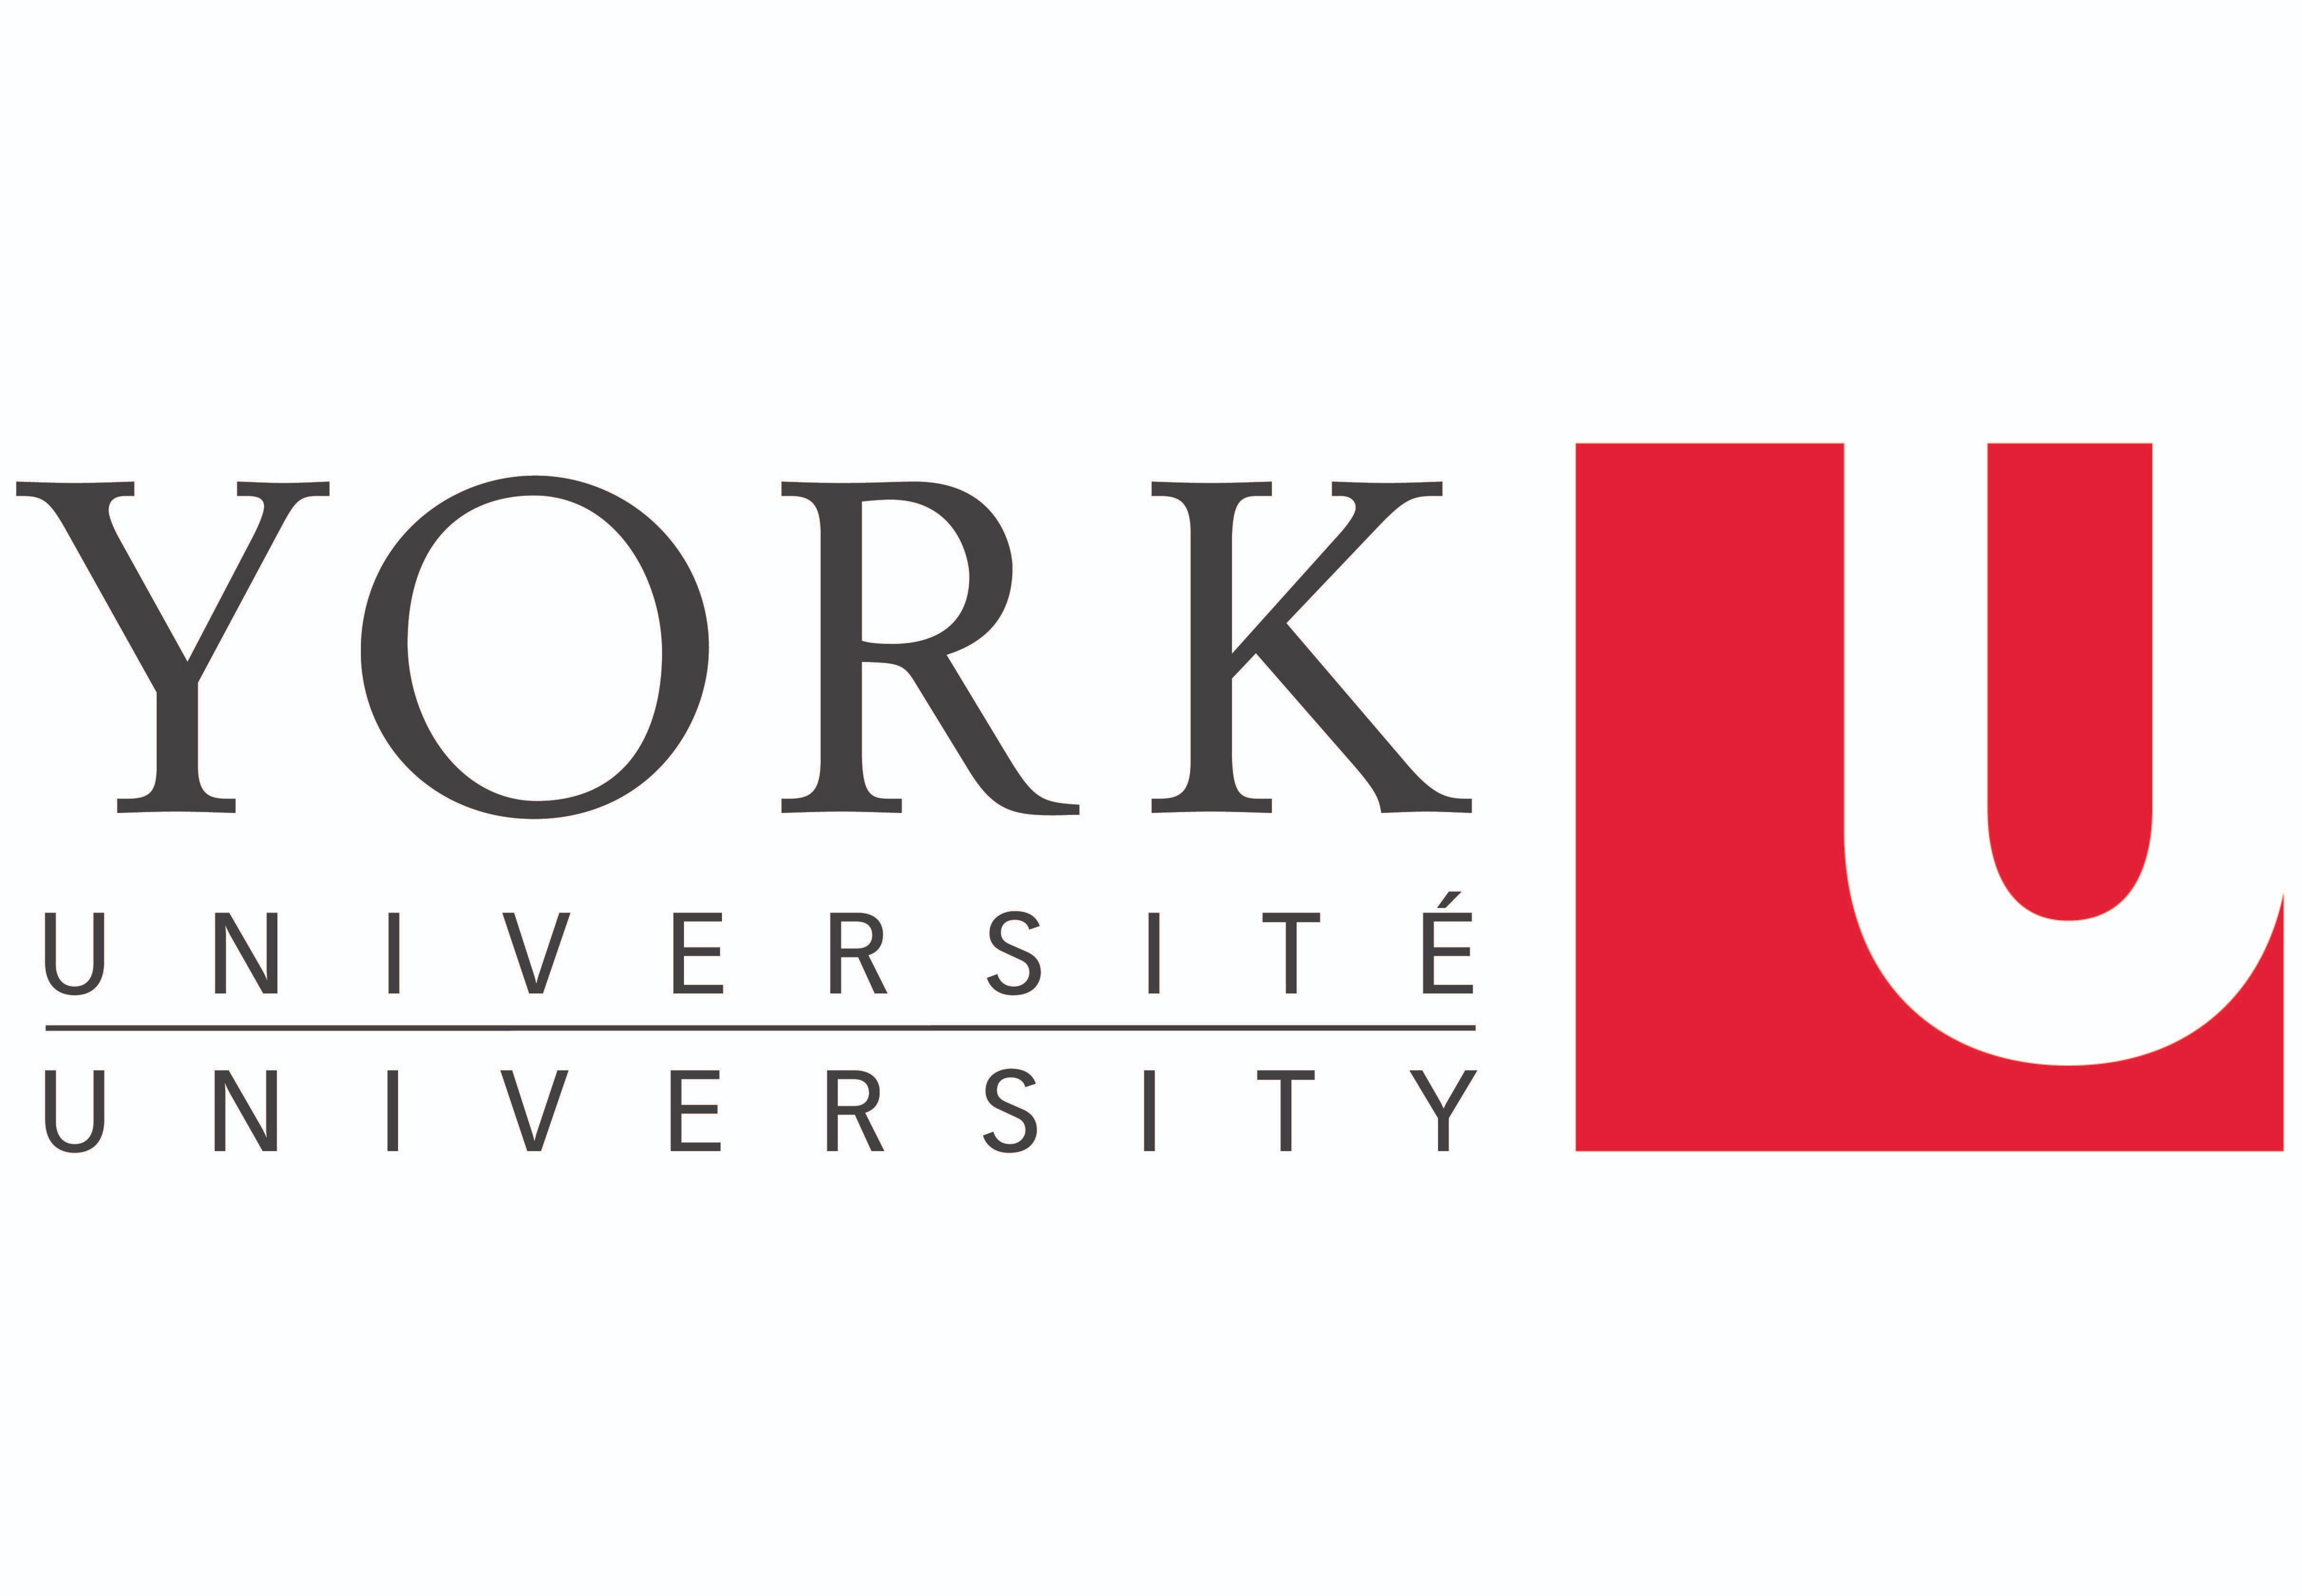 york-university